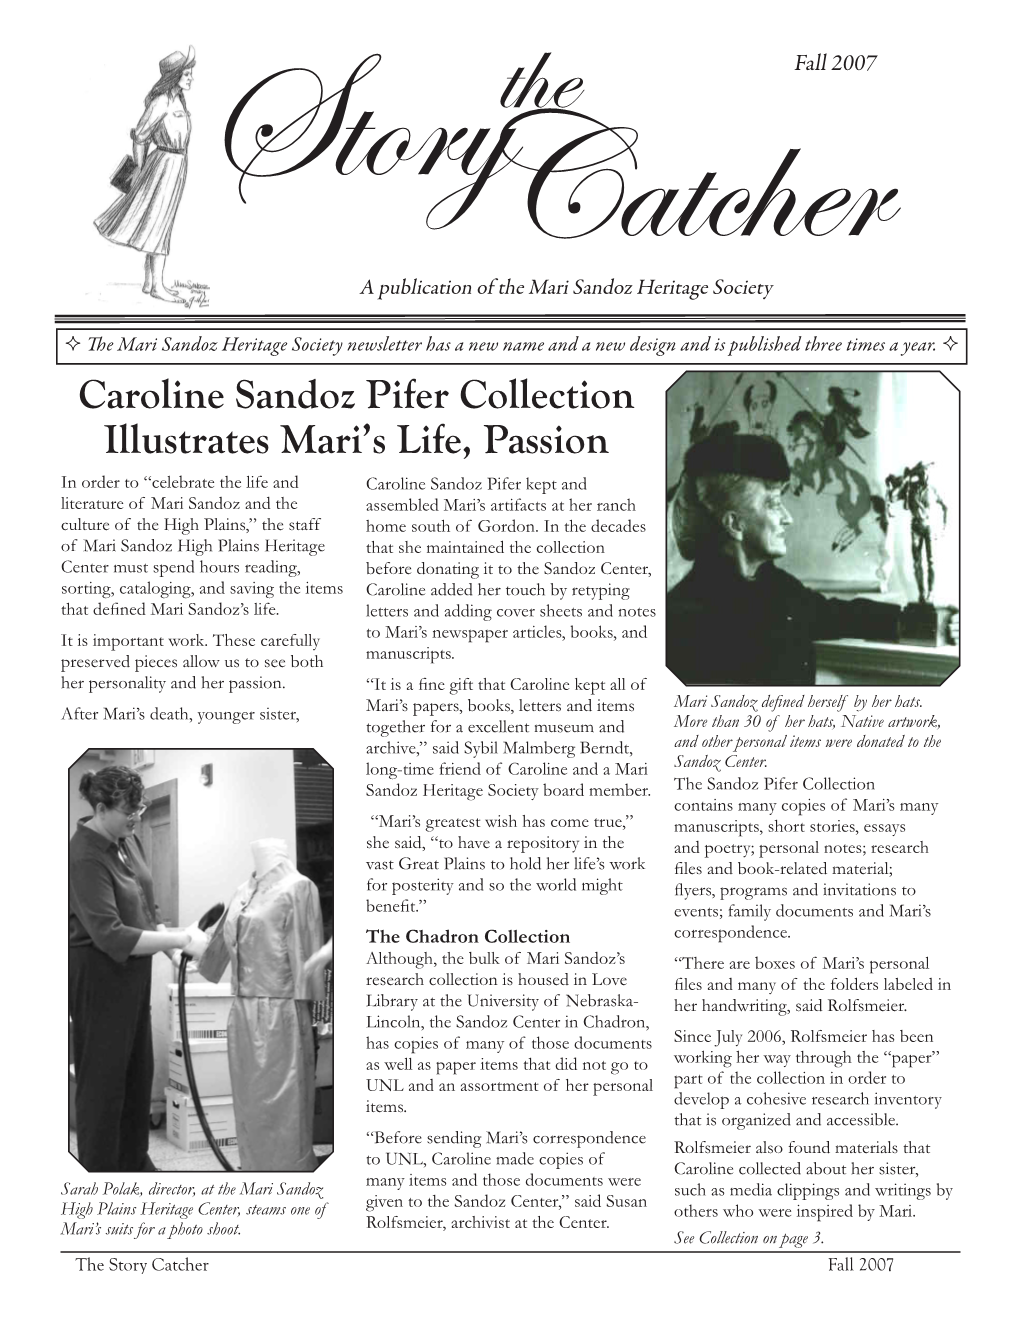 Caroline Sandoz Pifer Collection Illustrates Mari's Life, Passion